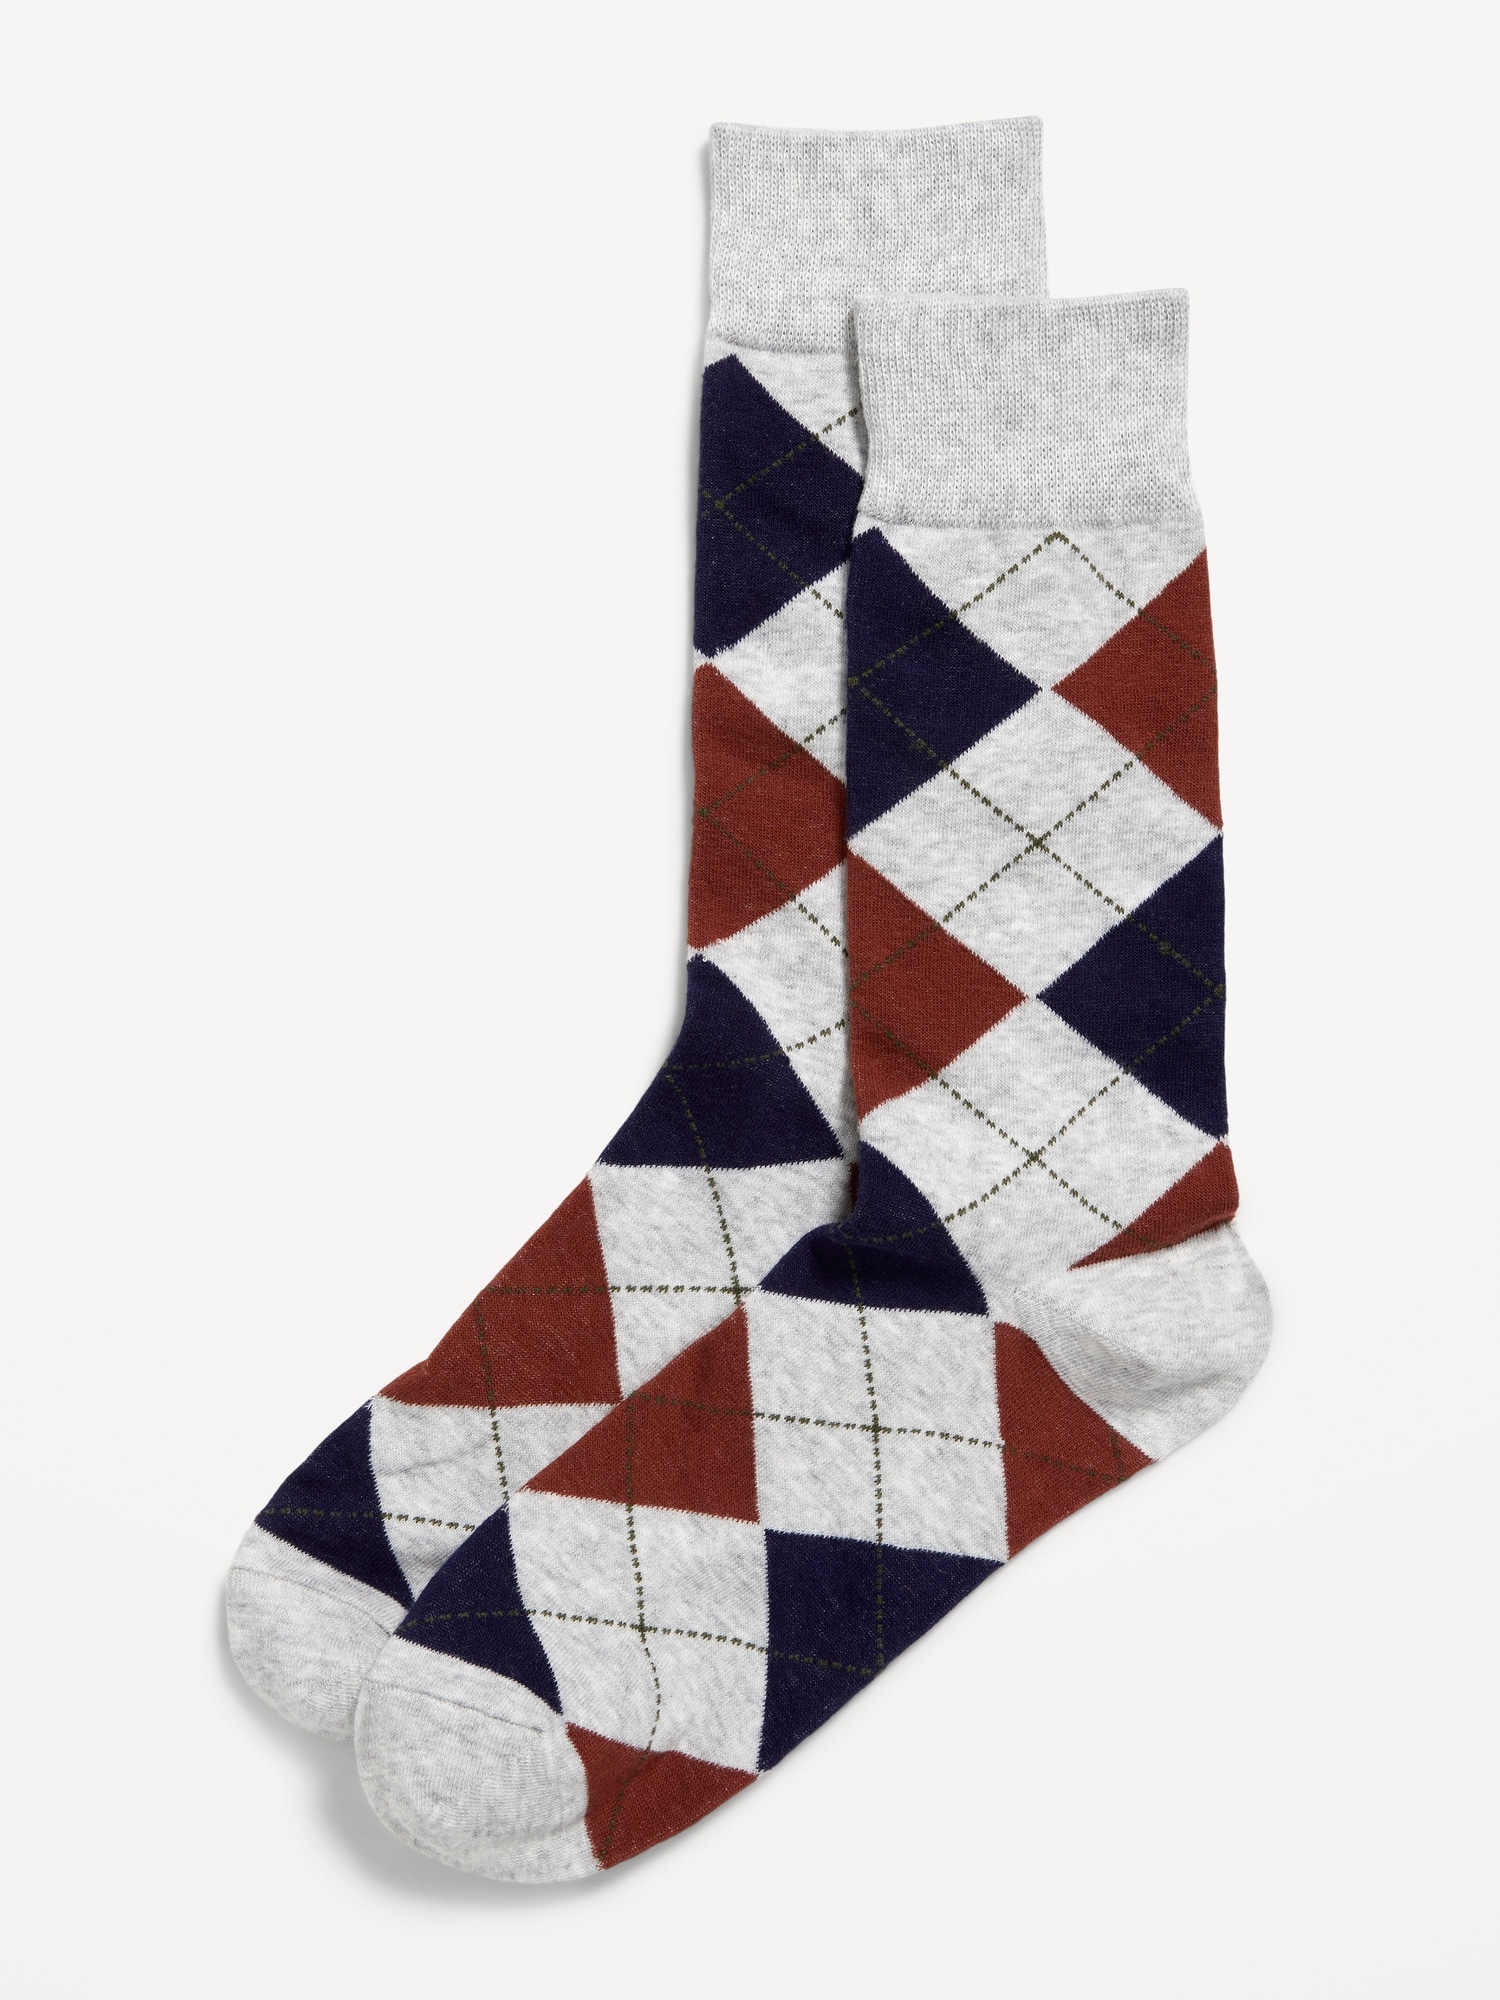 Printed Novelty Socks